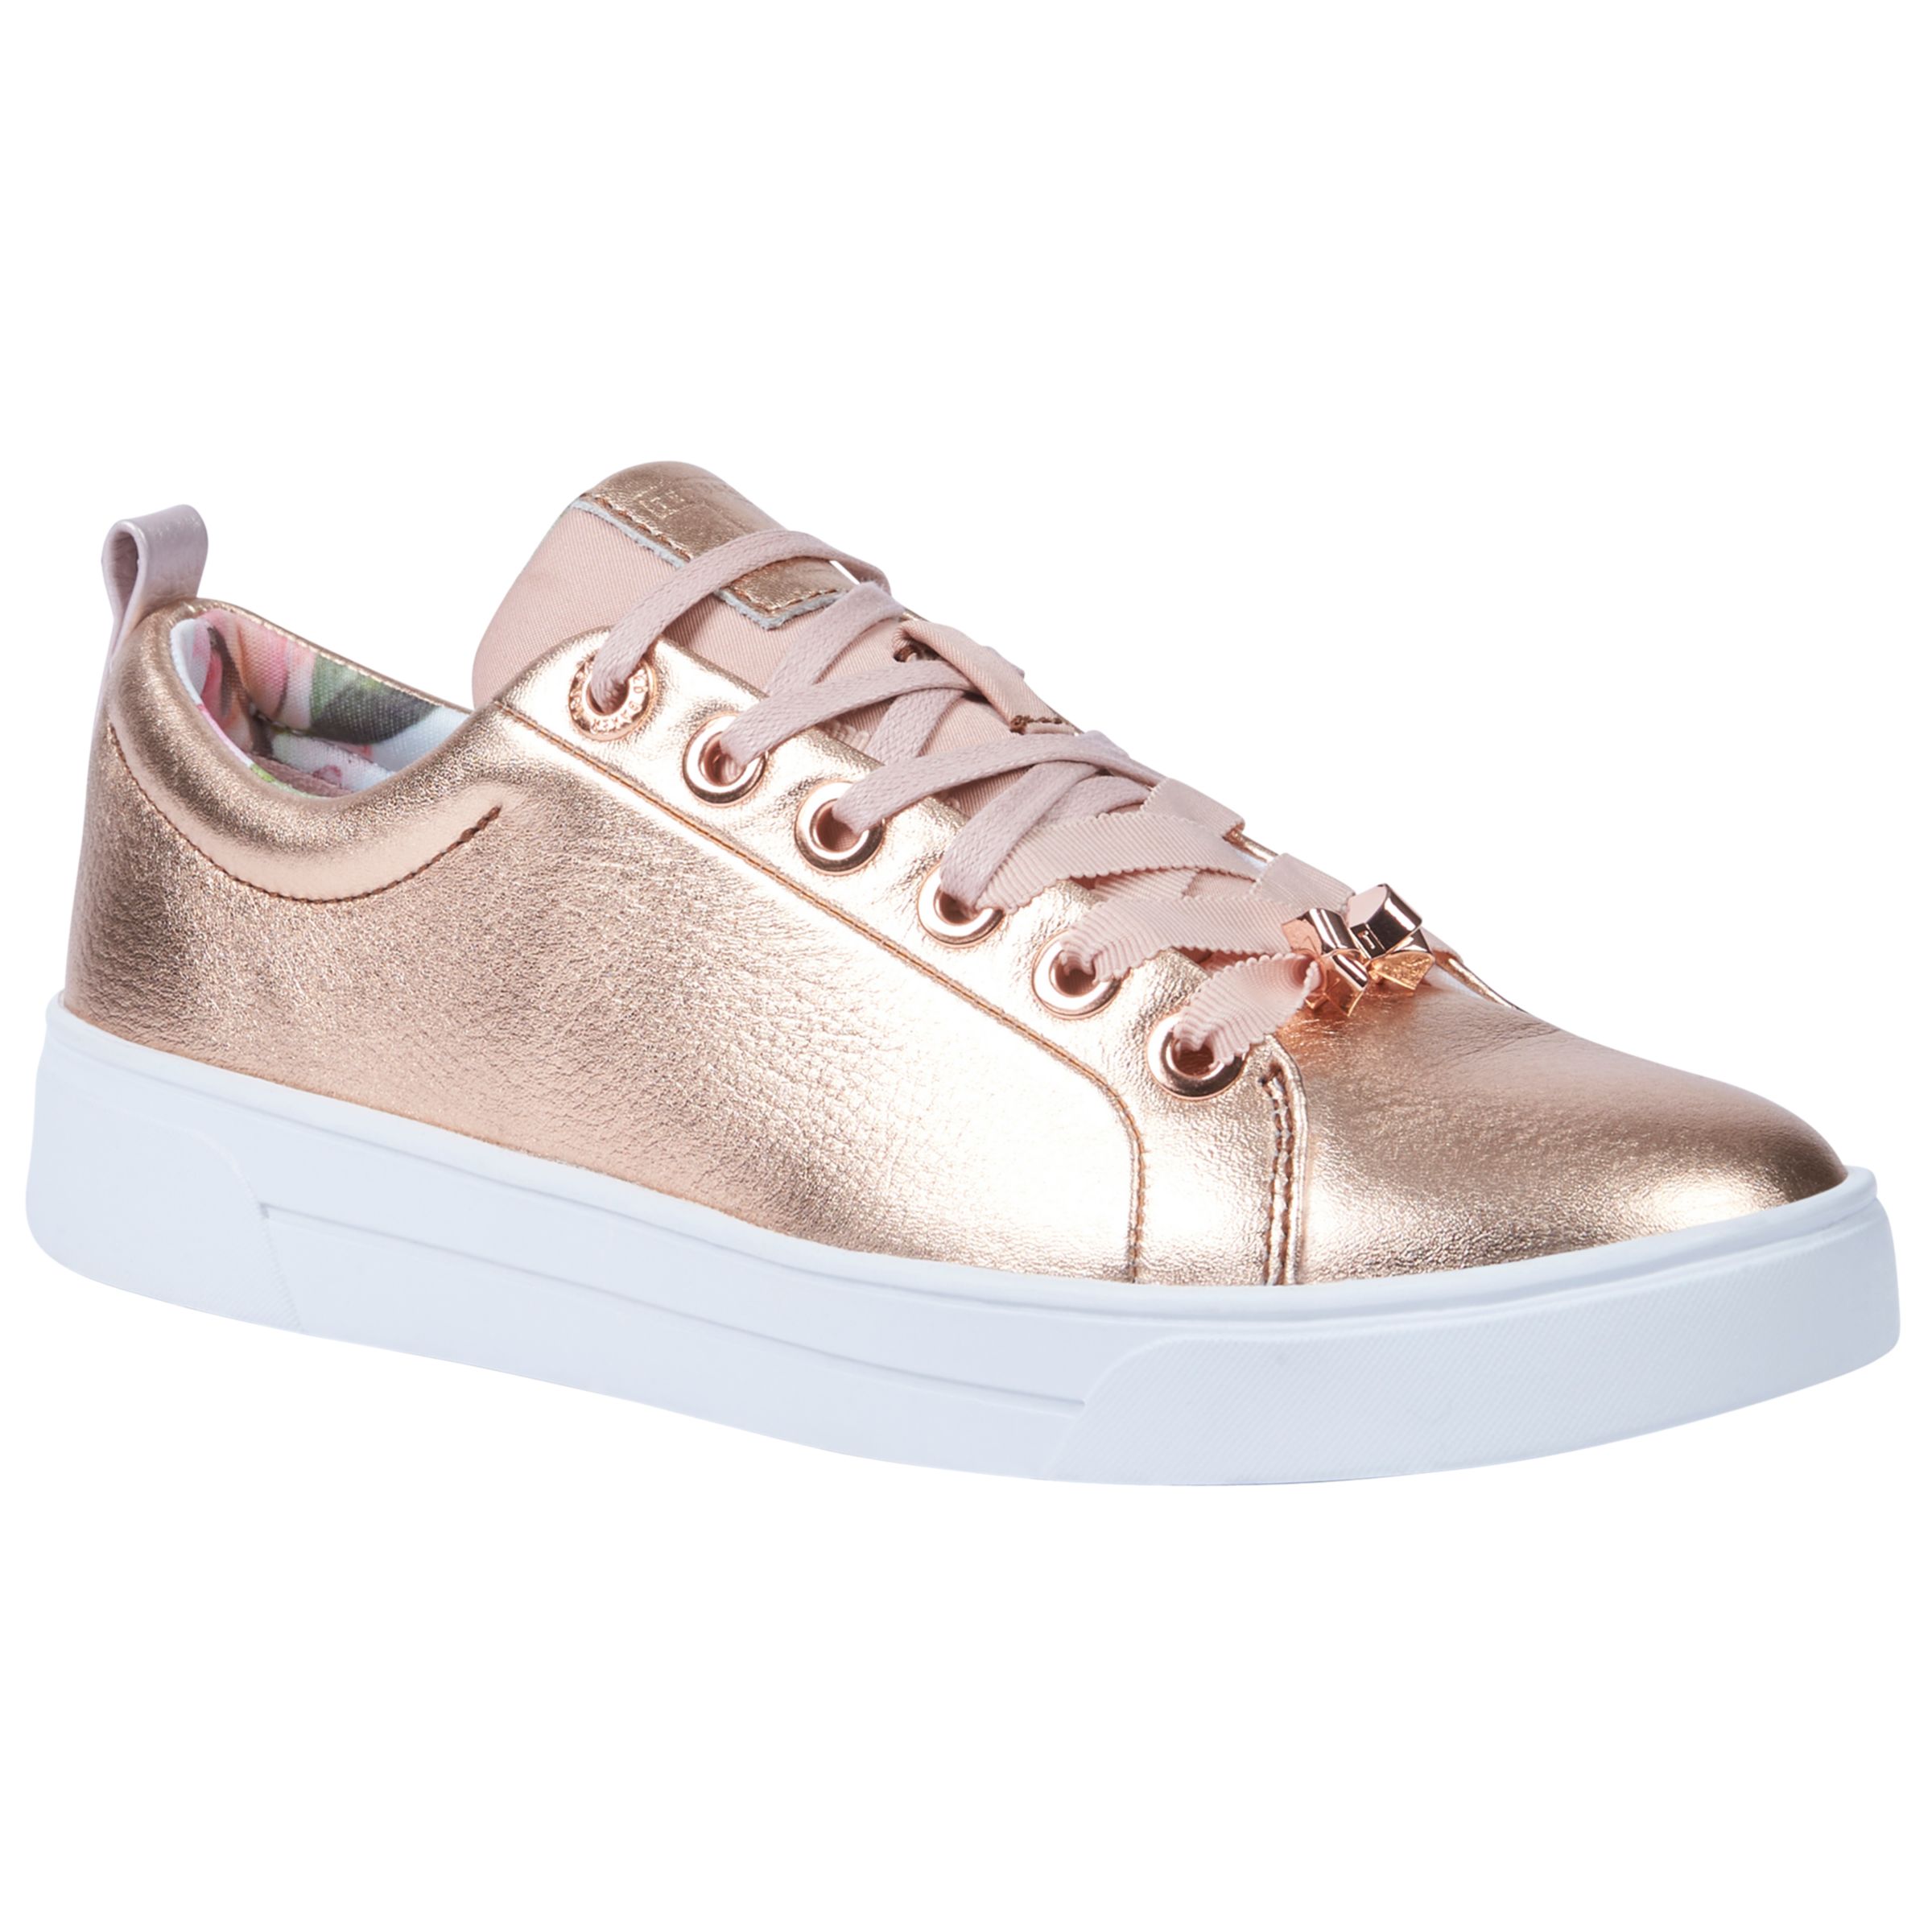 Ted Baker Women / Teen Girls KELLEIP Low Top Sneakers Shoes White - size US  5